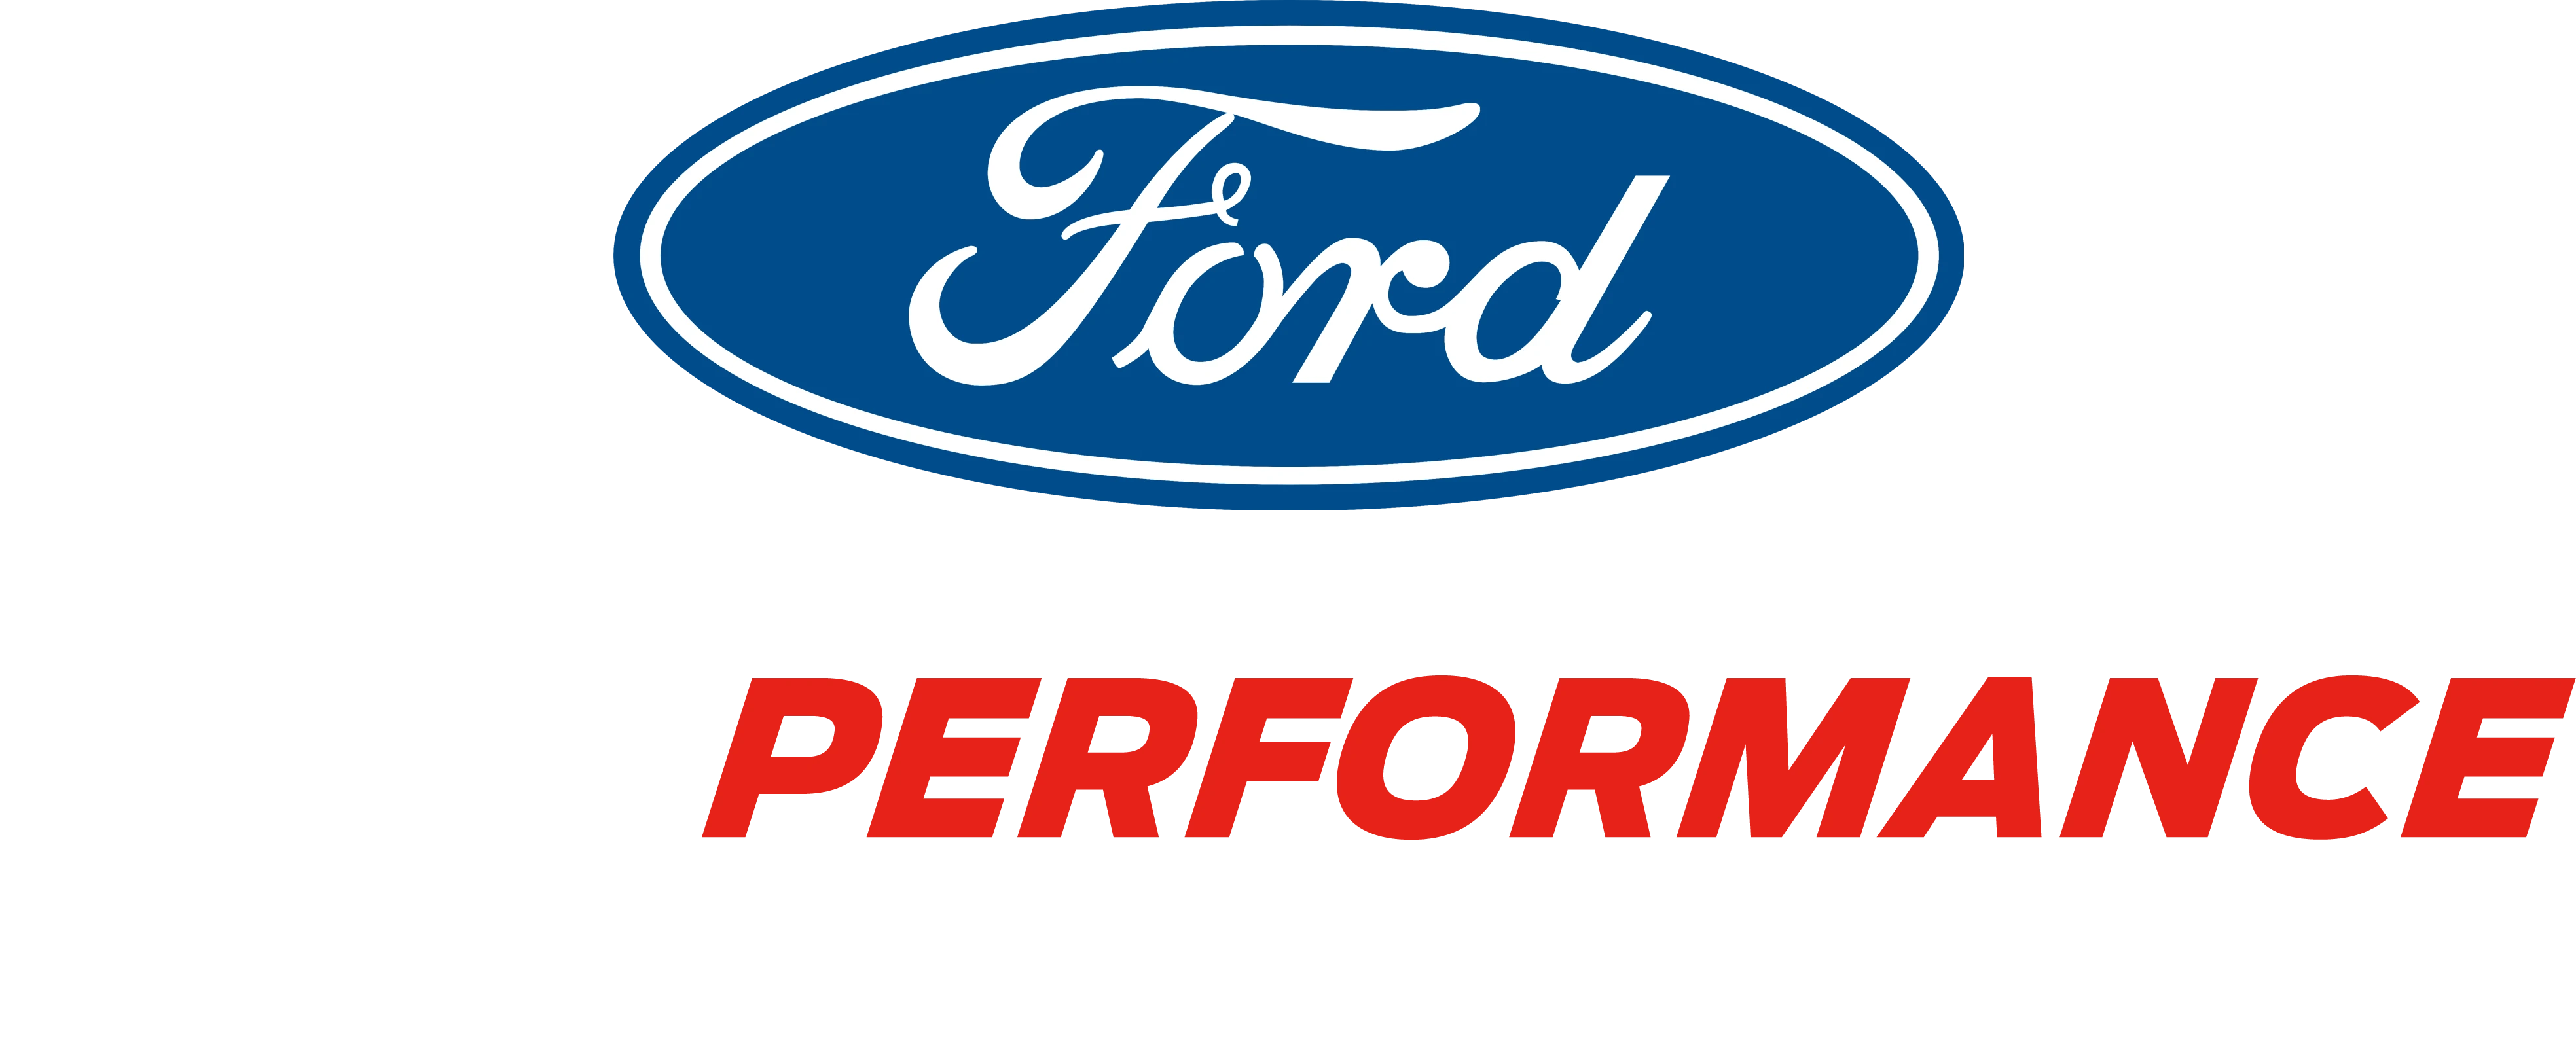 2315-ford-performance-club-logo-high-white-flat-17125028960873.png